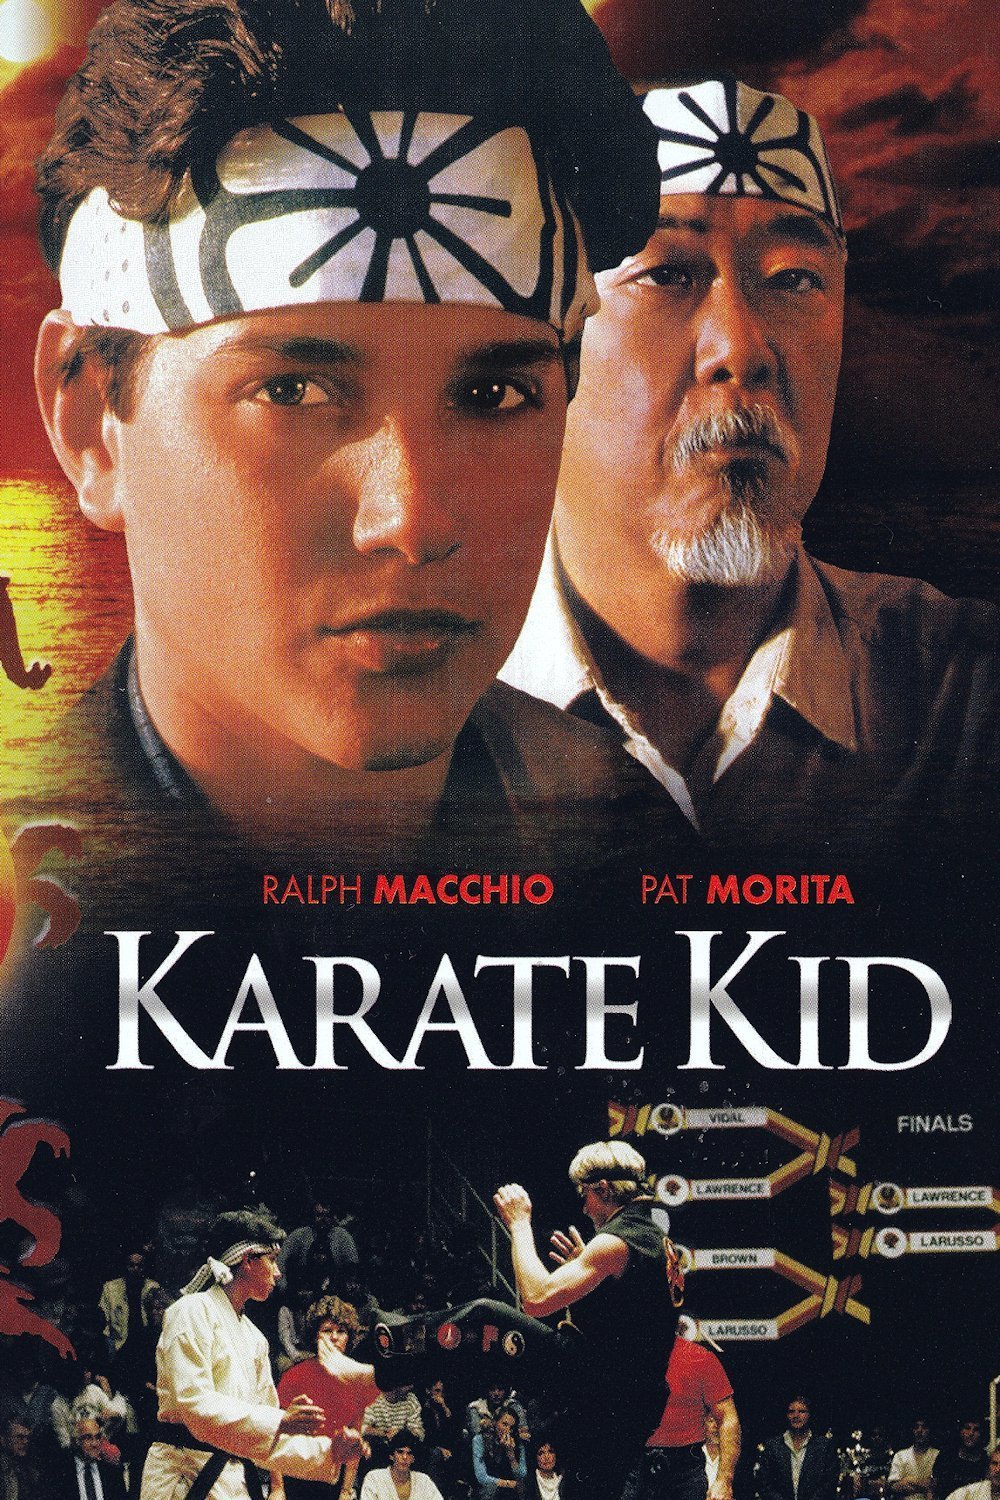 Mjolnir Magazine: FILM REVIEW: THE KARATE KID, How Hollywood